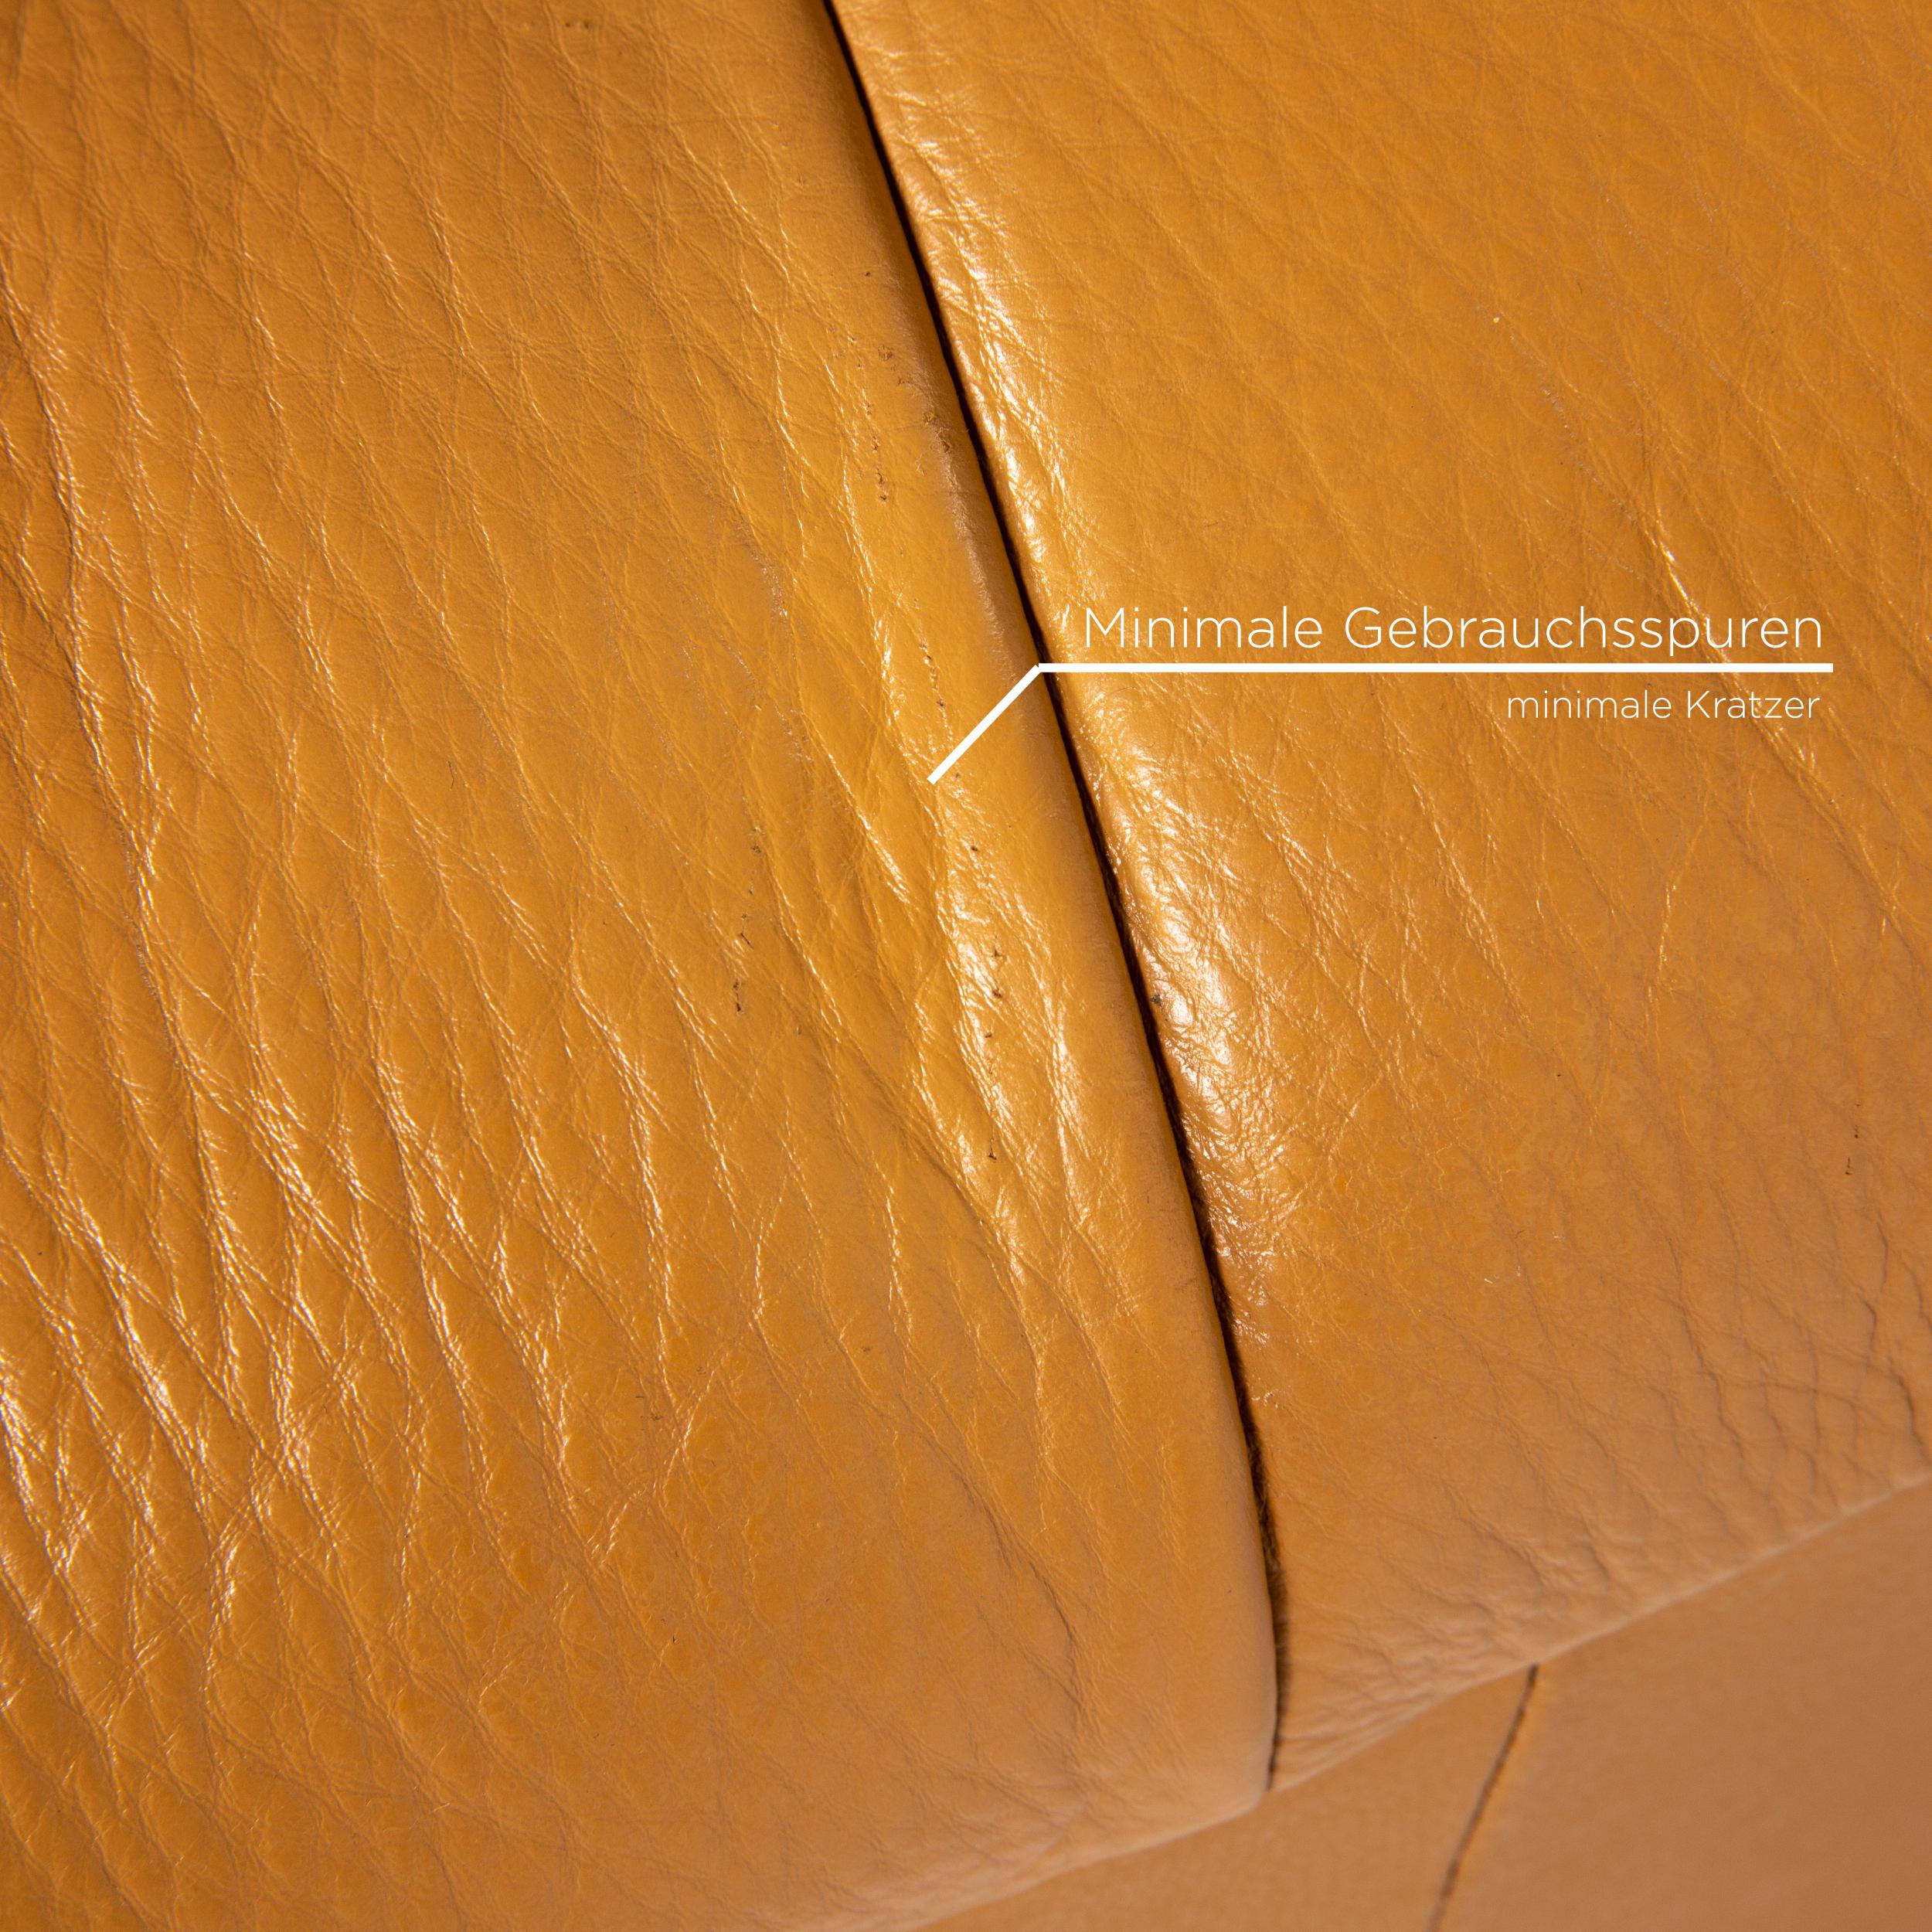 mustard yellow leather sofa